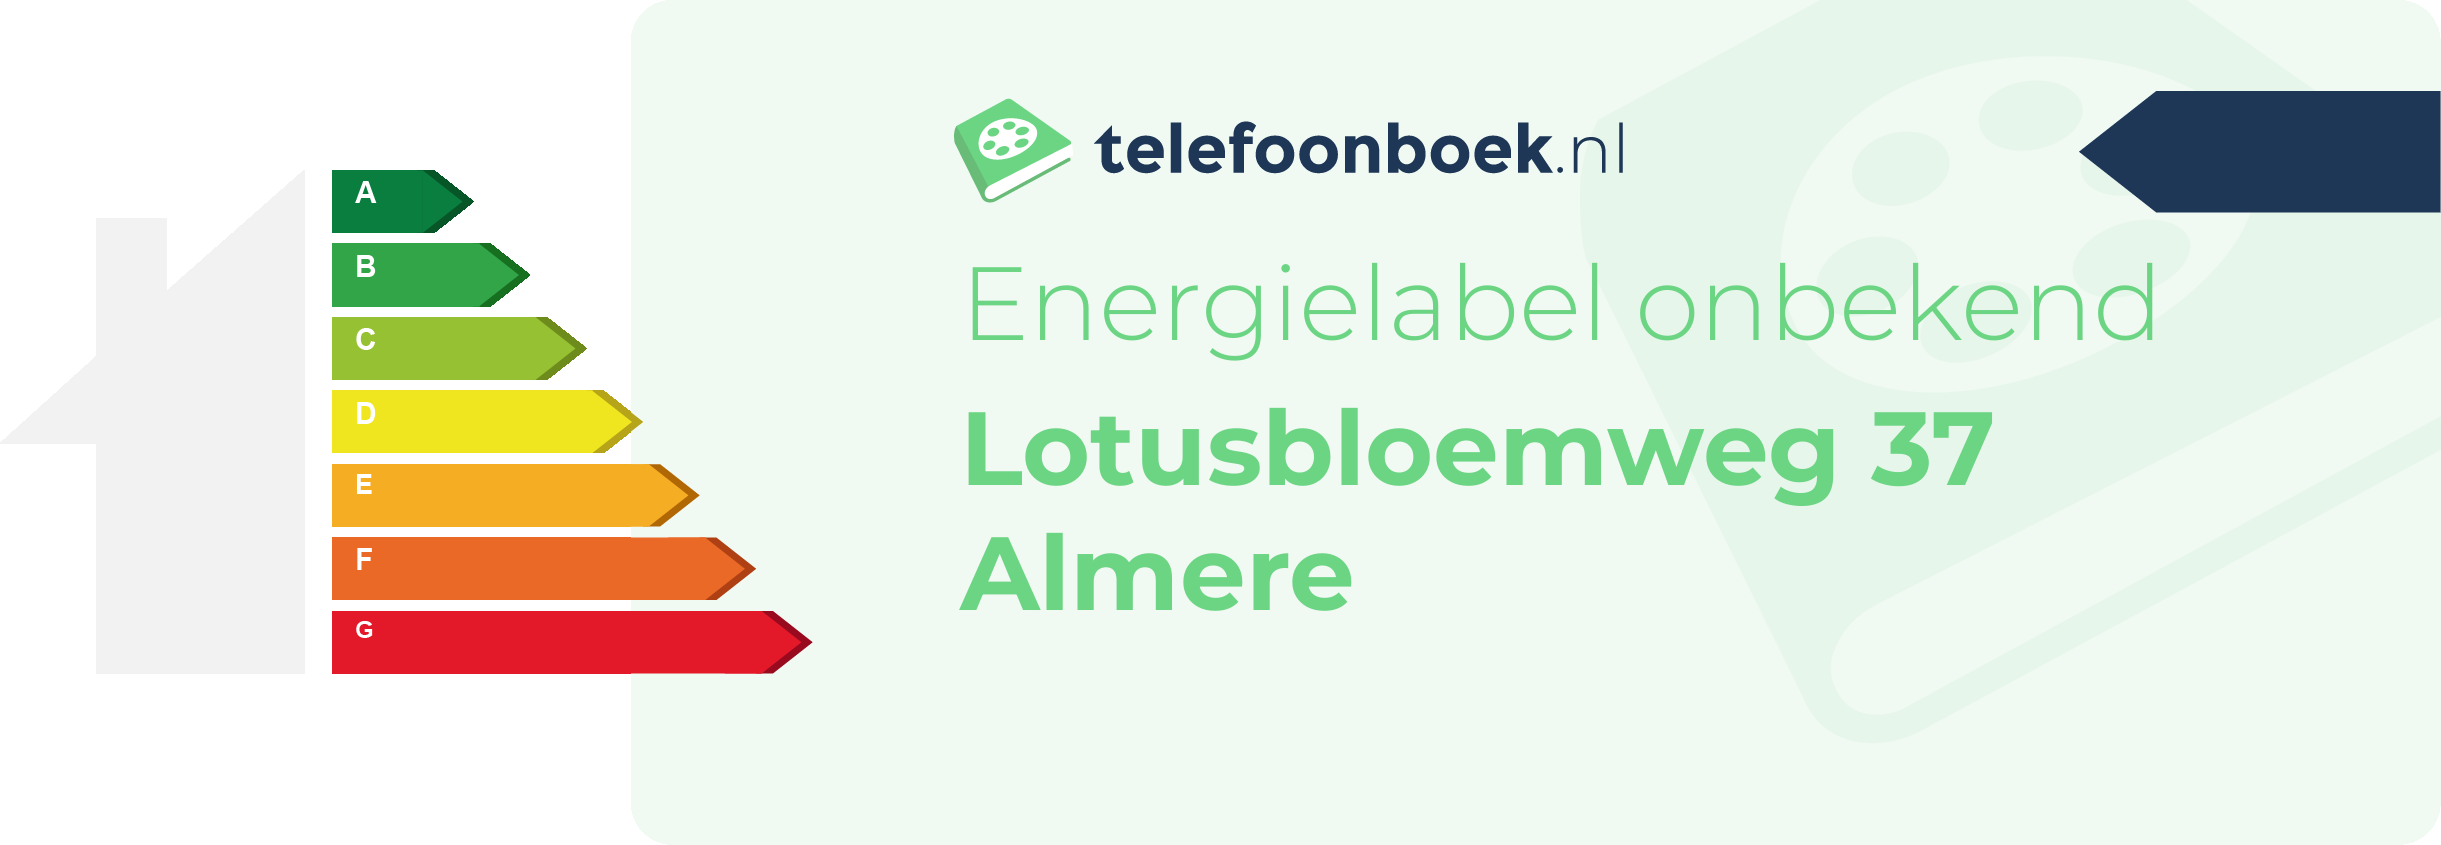 Energielabel Lotusbloemweg 37 Almere